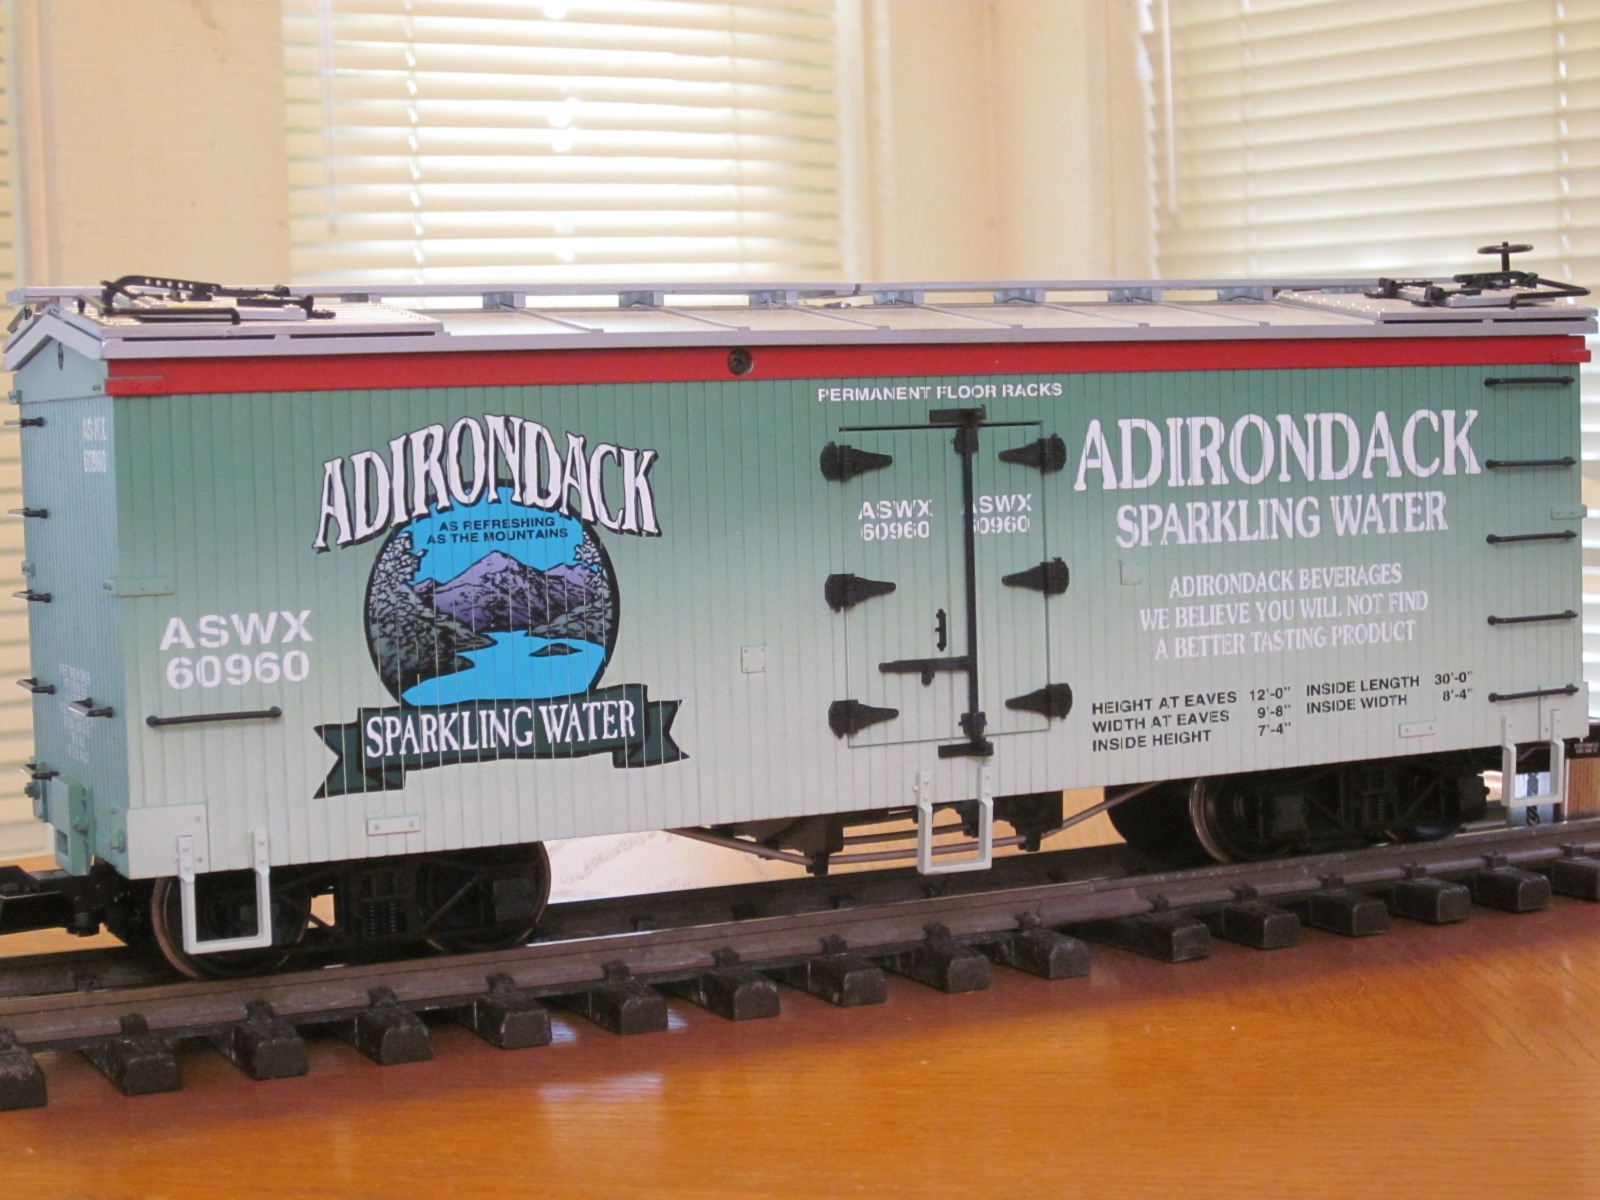 R16147 Adirondack Sparkling Water ASWX 60960